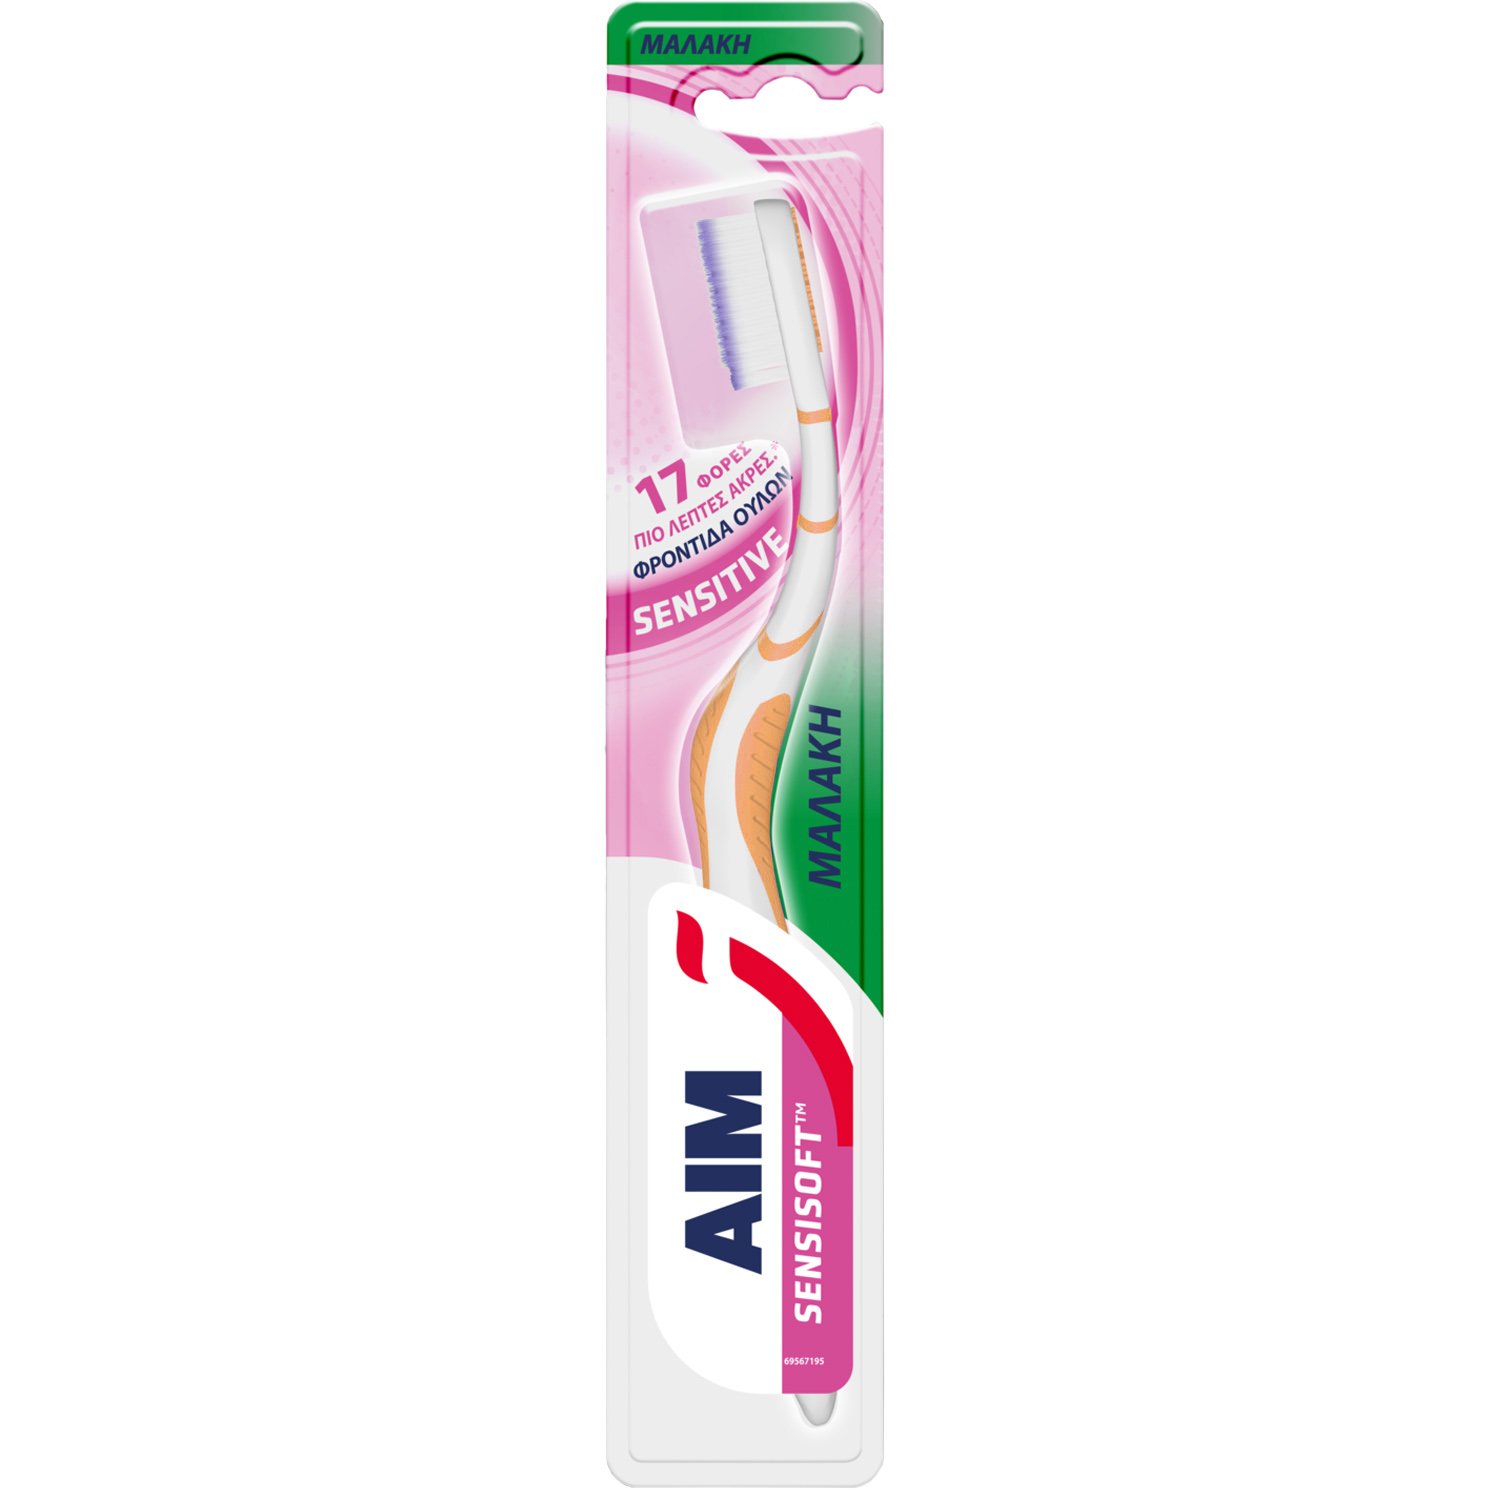 Aim Sensisoft Sensitive Toothbrush Χειροκίνητη Μαλακή Οδοντόβουρτσα με 17 Φορές πιο Λεπτές Άκρες για τη Φροντίδα των Ούλων 1 Τεμάχιο – Πορτοκαλί / Μωβ